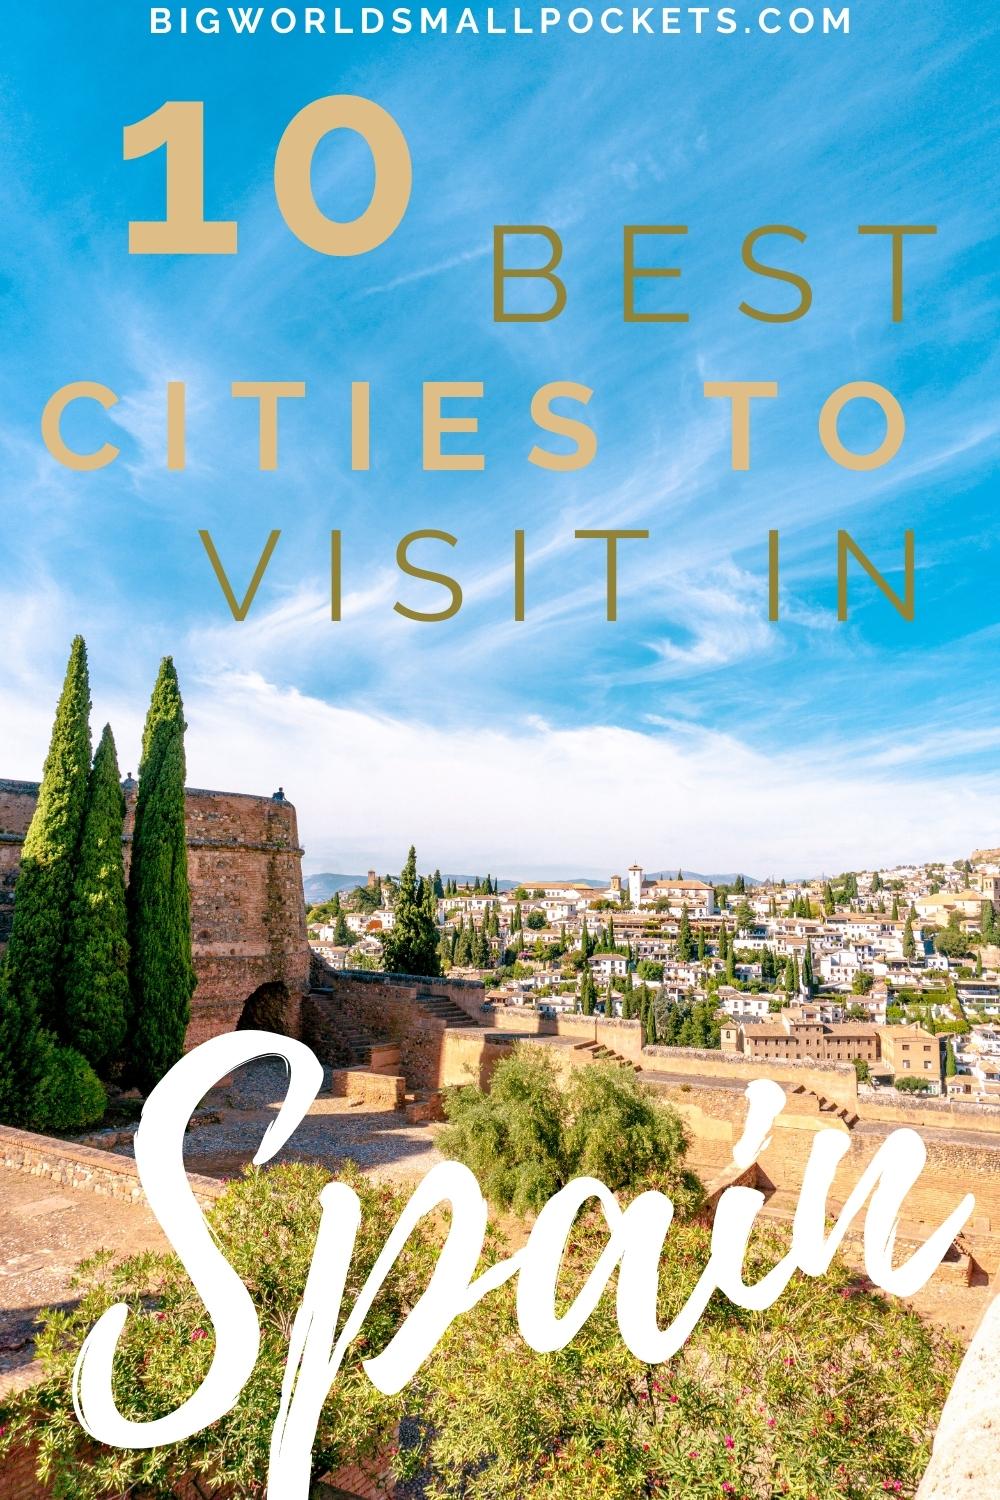 10 Best Cities to Visit in Spain